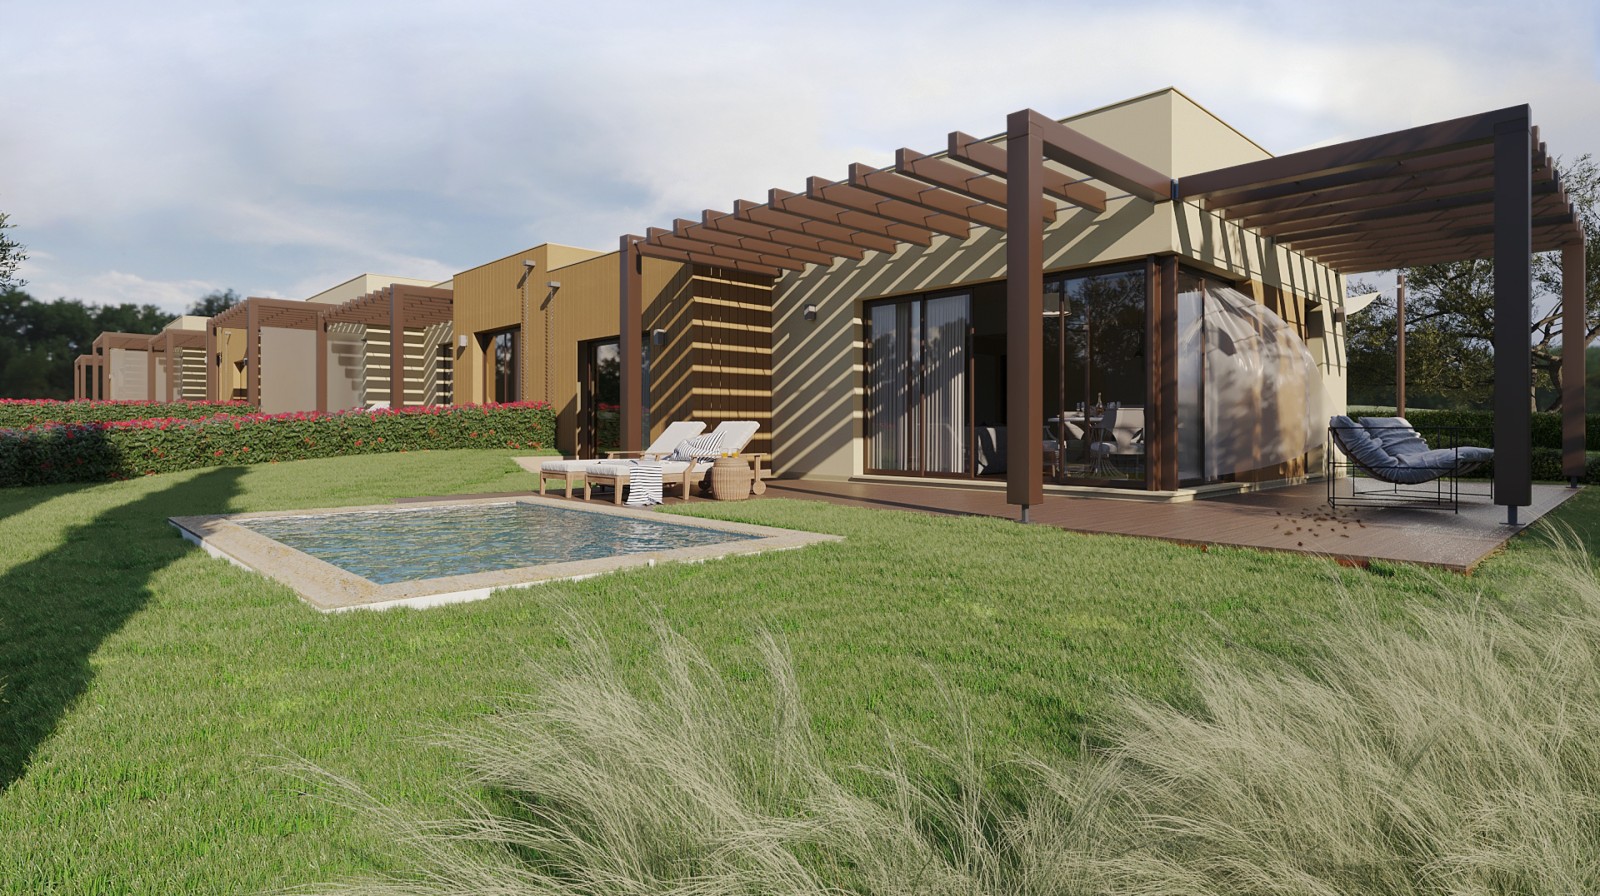 2 bedroom semi-detached villa with swimming pool for sale in Golf resort, Algarve_218695